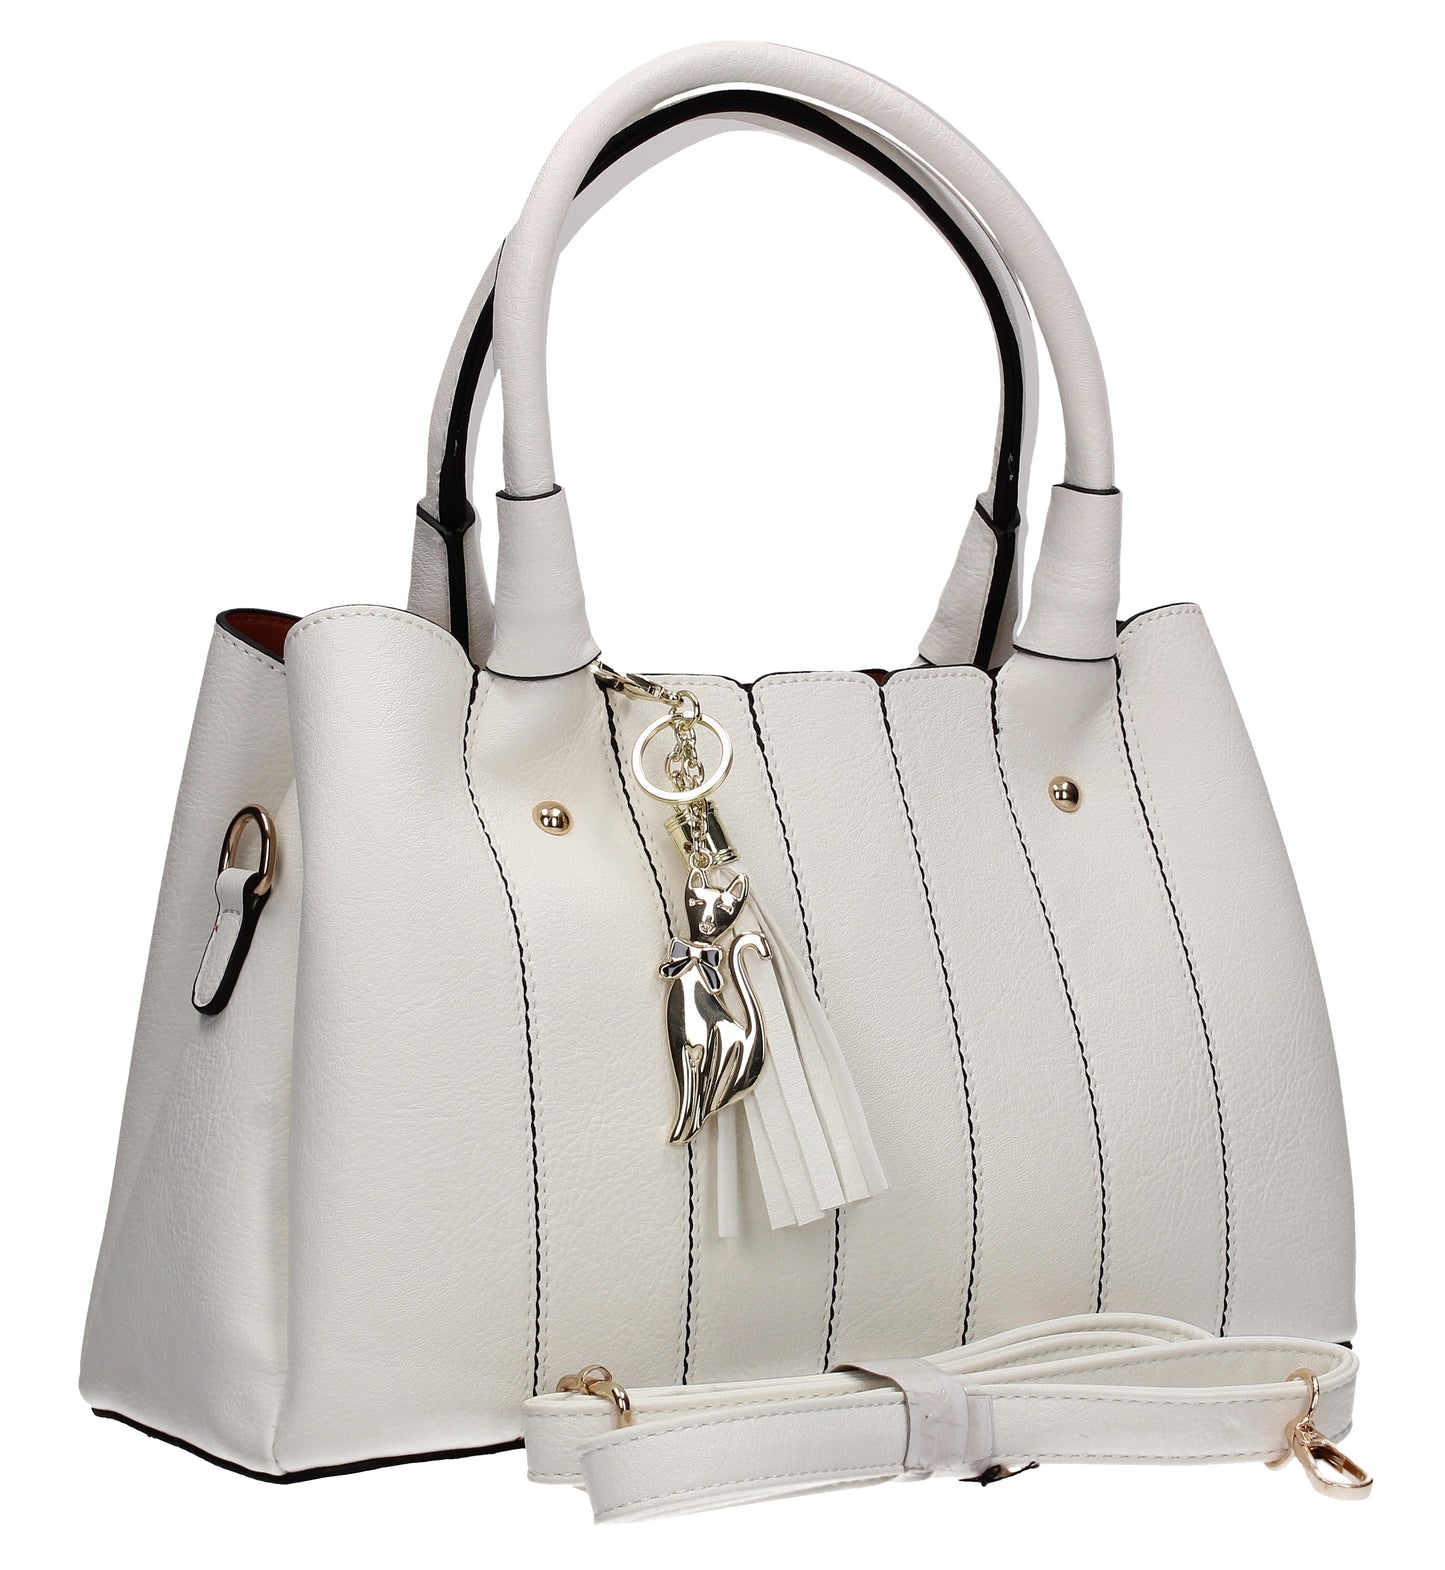 Casey Tassle Handbag WhiteBeautiful Cute Animal Faux Leather Clutch Bag Handles Strap Summer School